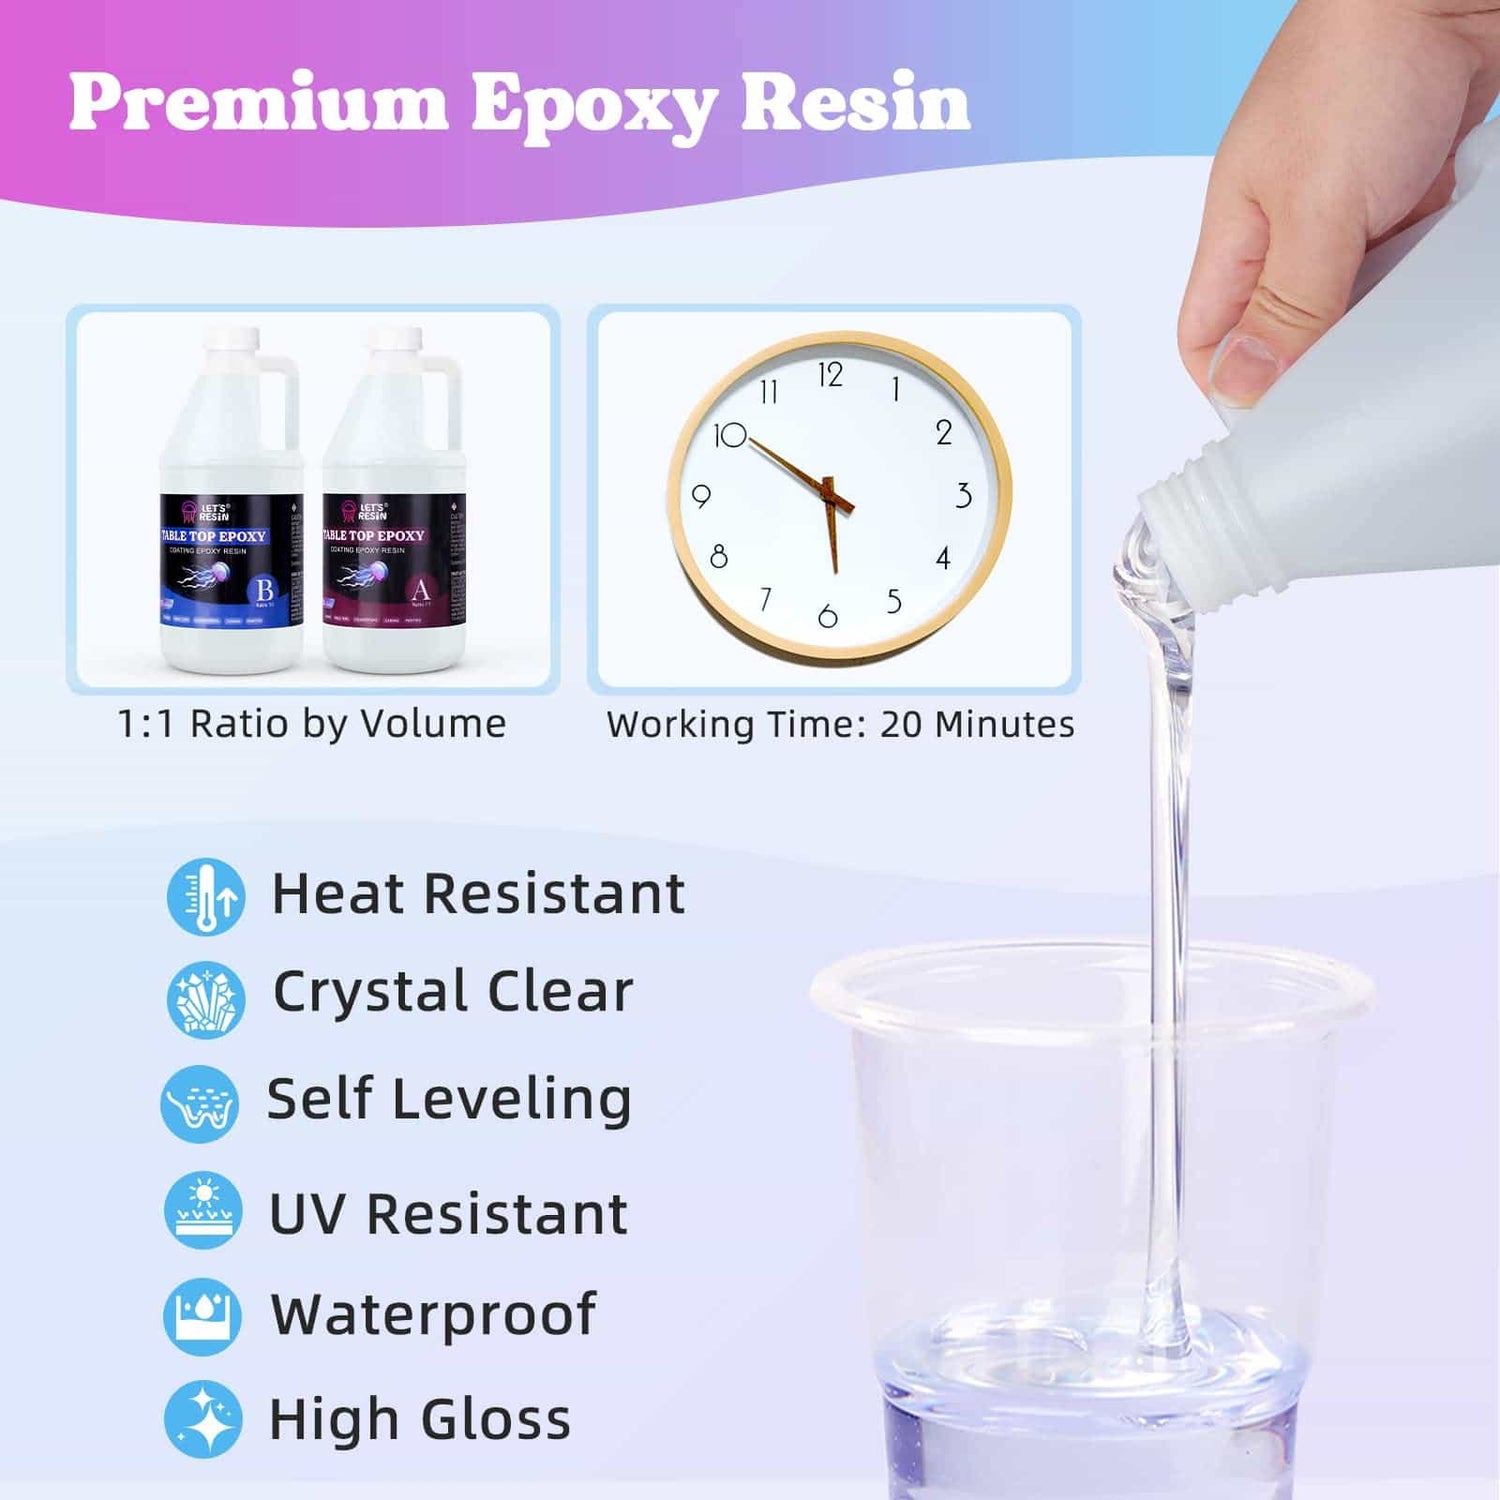 Table Top Epoxy: UpStart Epoxy's High-Gloss Resin for Wood 1 Gallon Kit